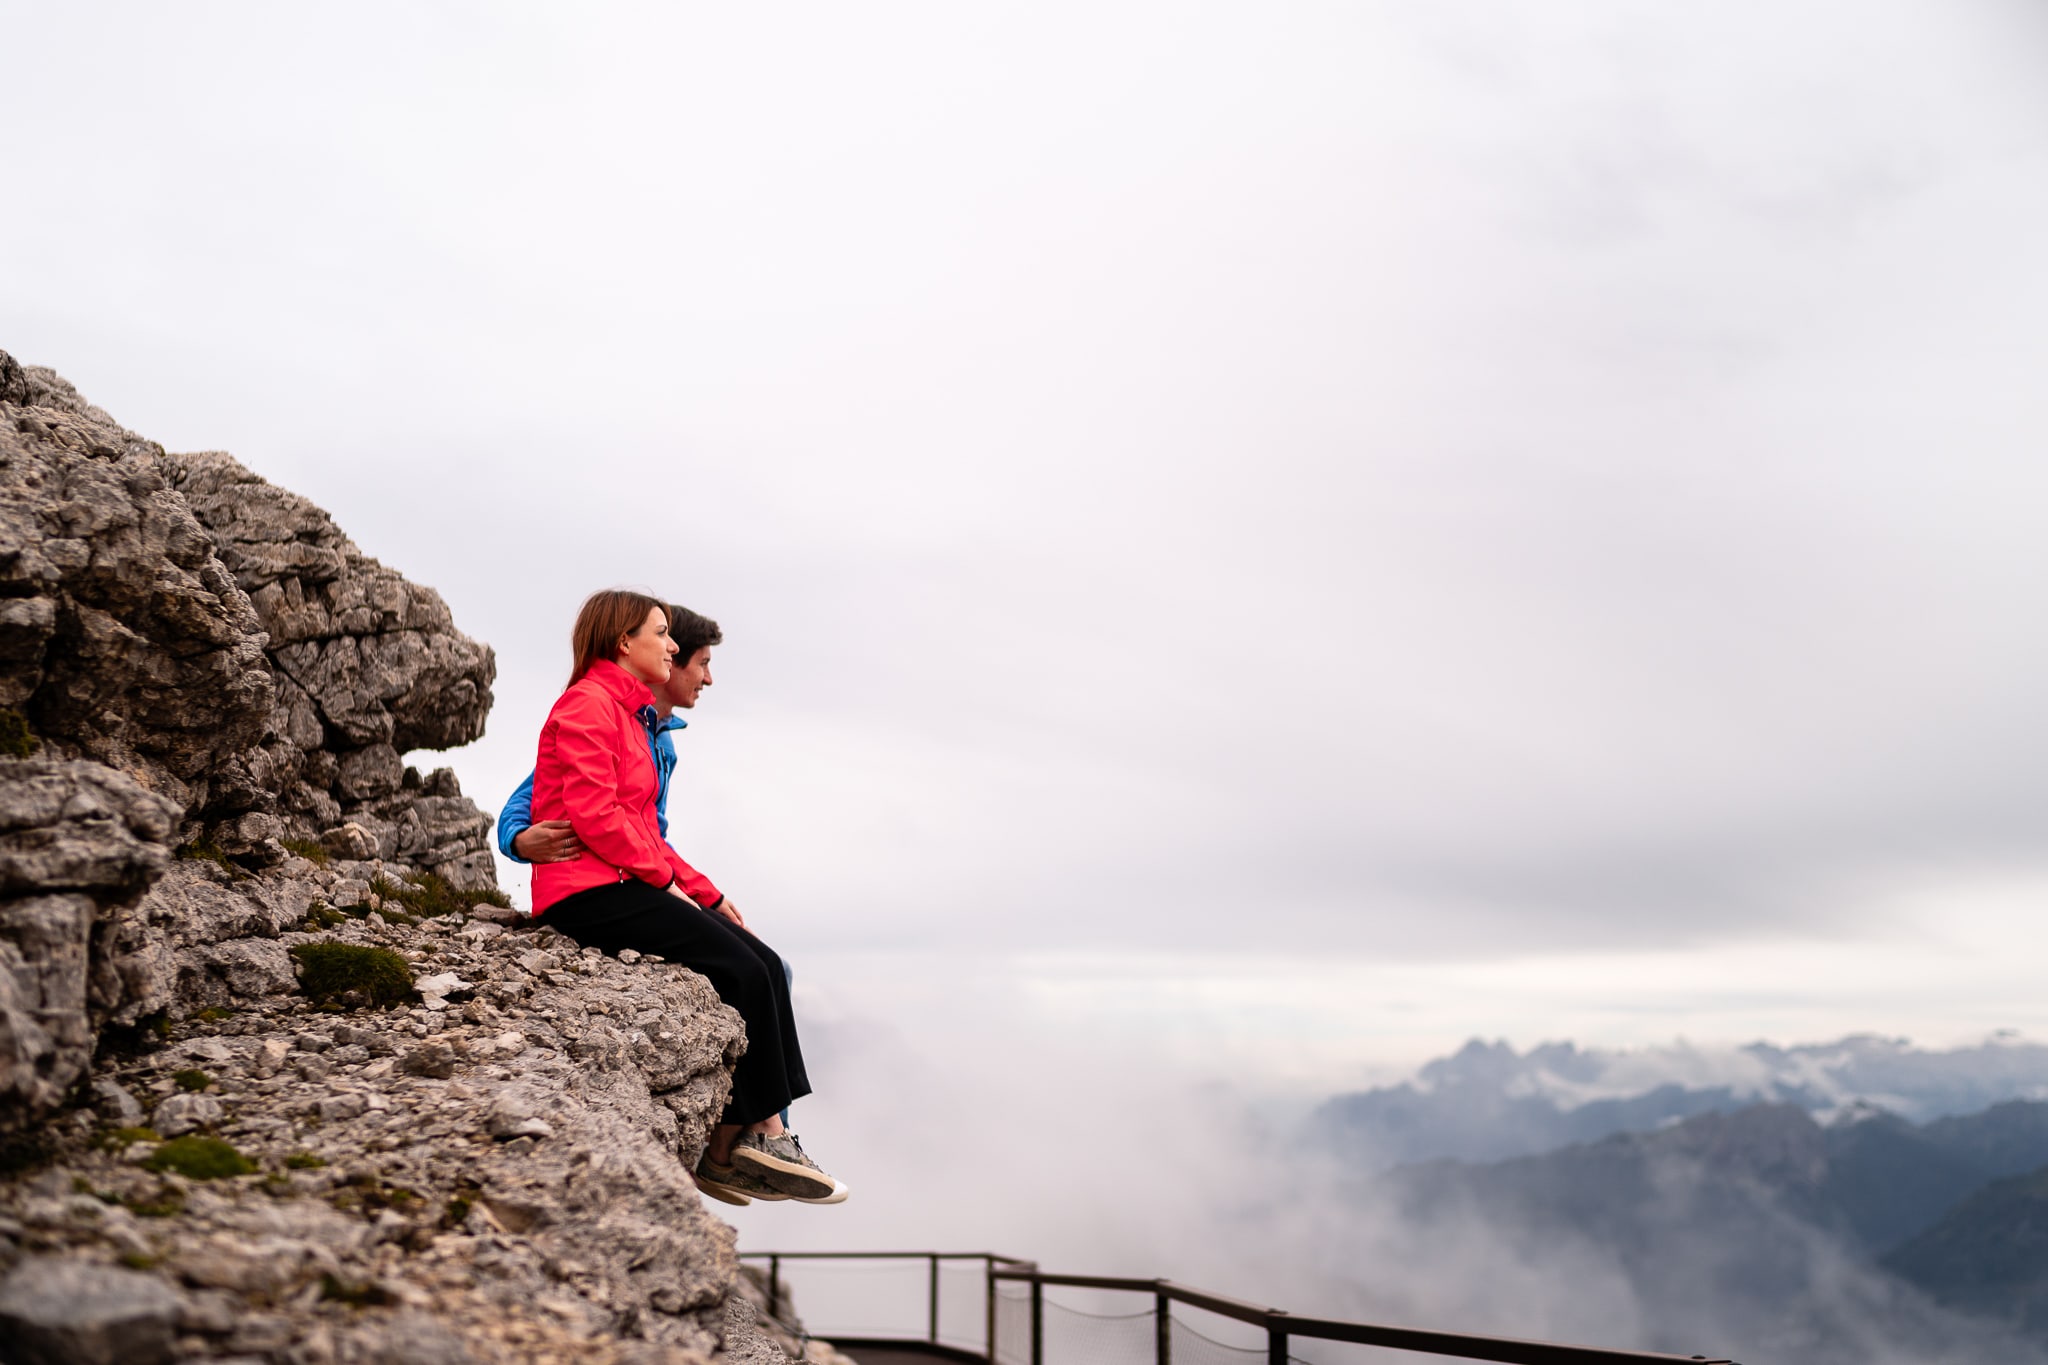 Alessandra Raffaele Prematrimoniale Dolomiti Alta Badia Rifugio Lagazuoi coppia seduta sulla roccia guarda panorama montagna